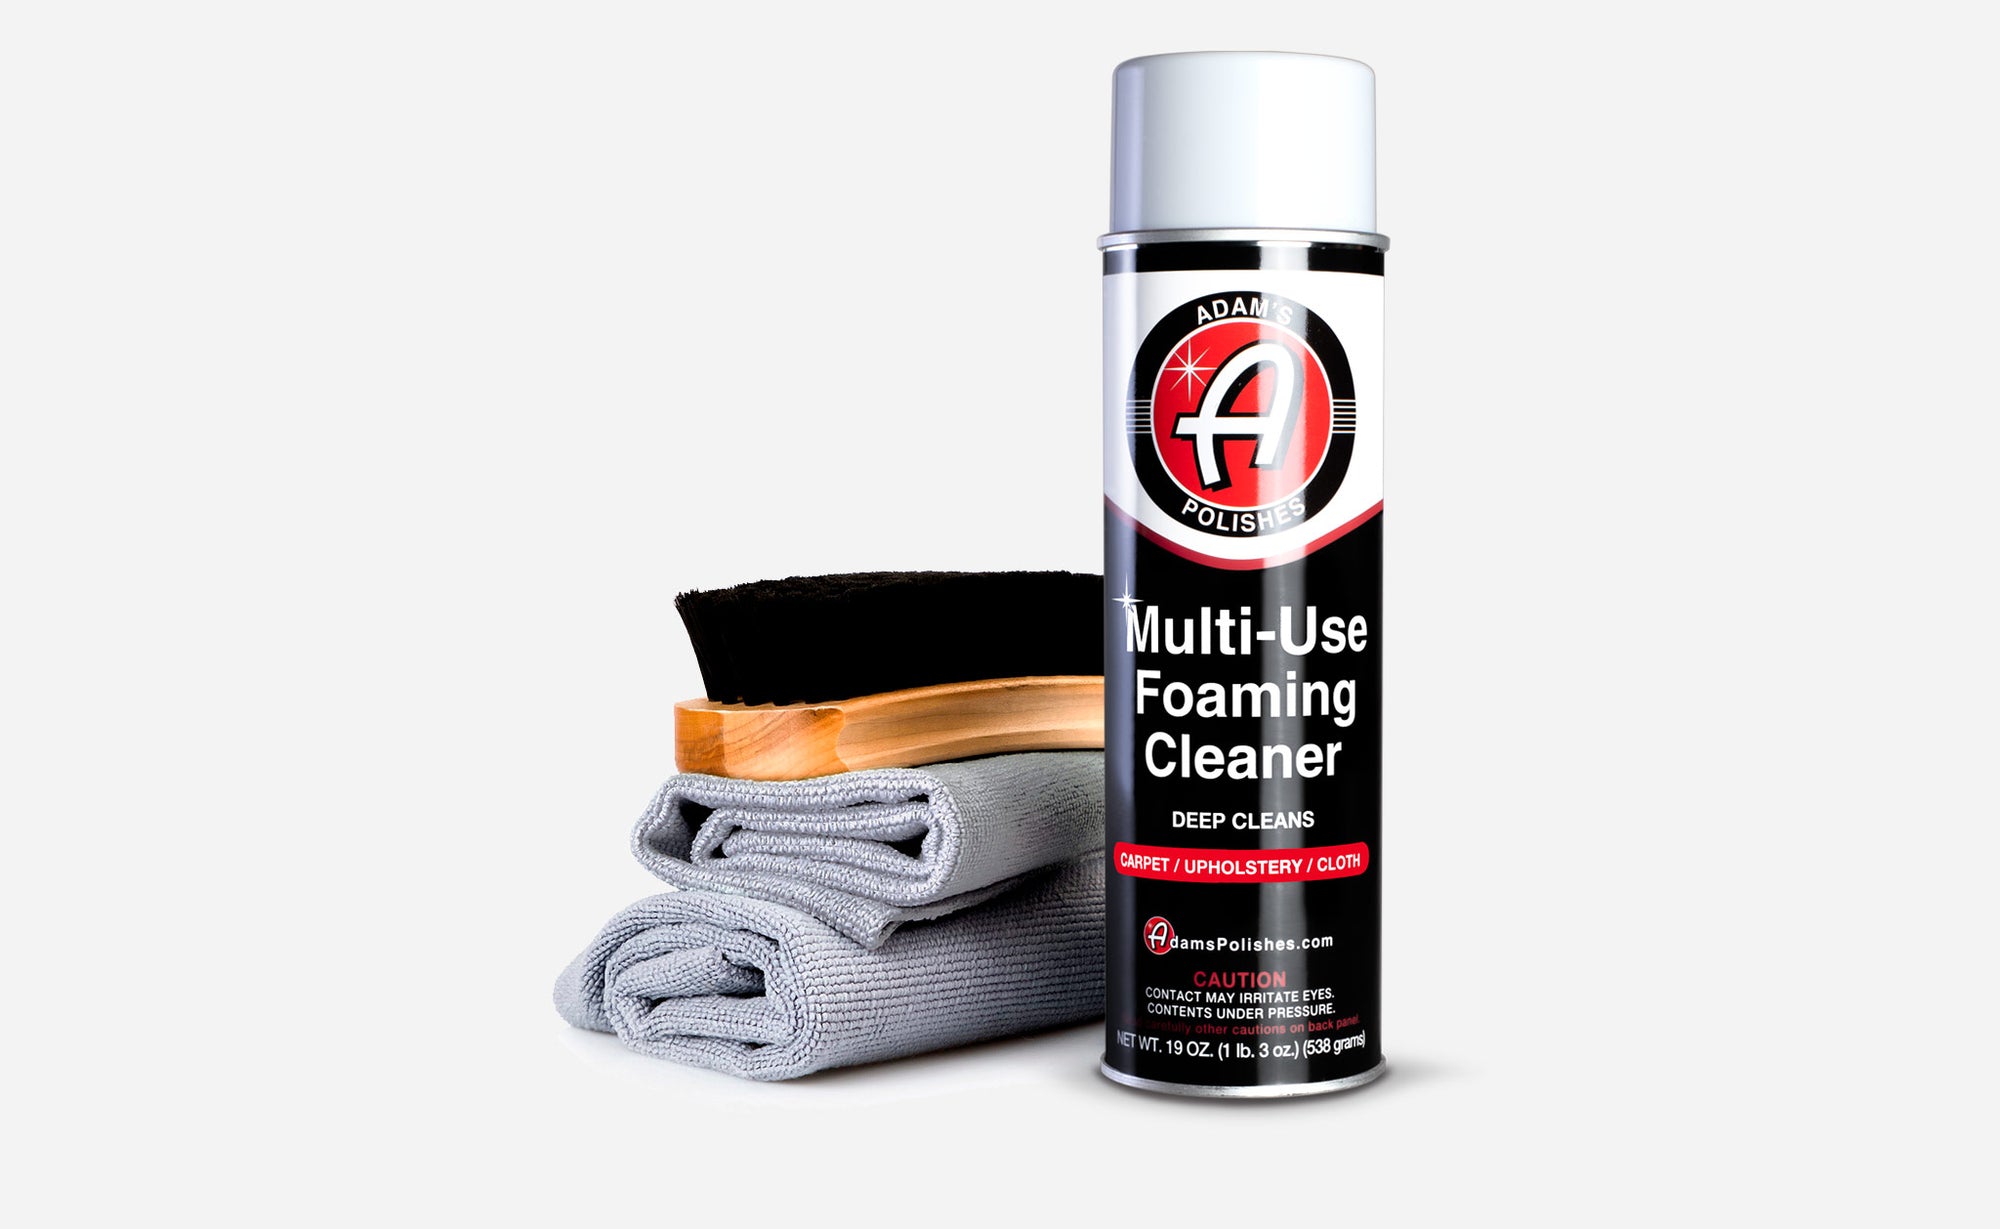 Adam’s Multi-Use Foaming Cleaner Kit